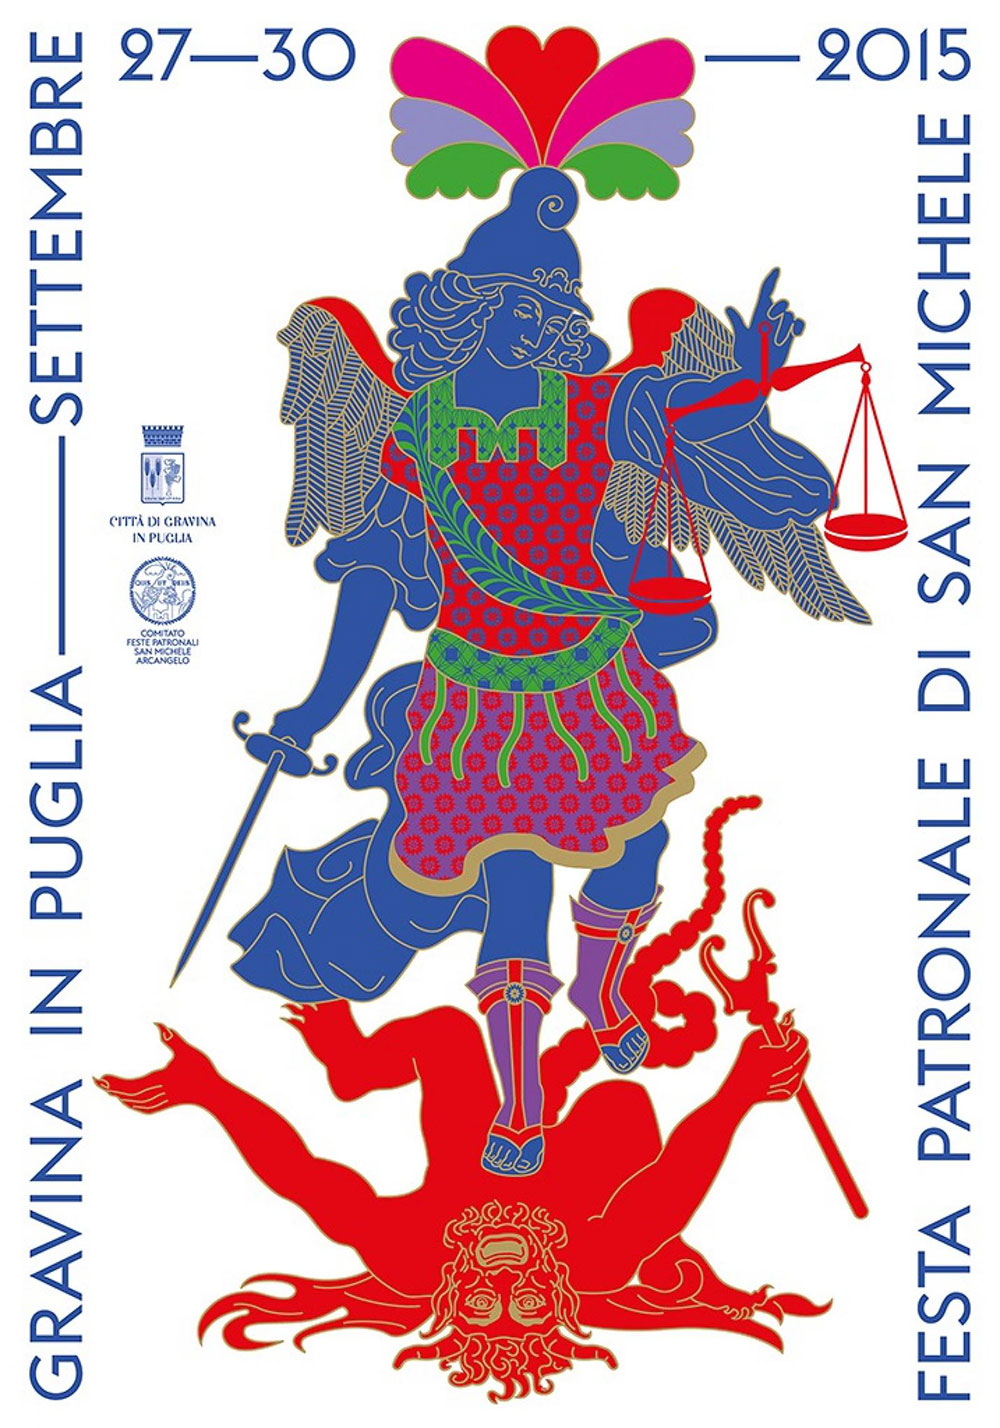 Poster for the Saint Michael Patronal festival